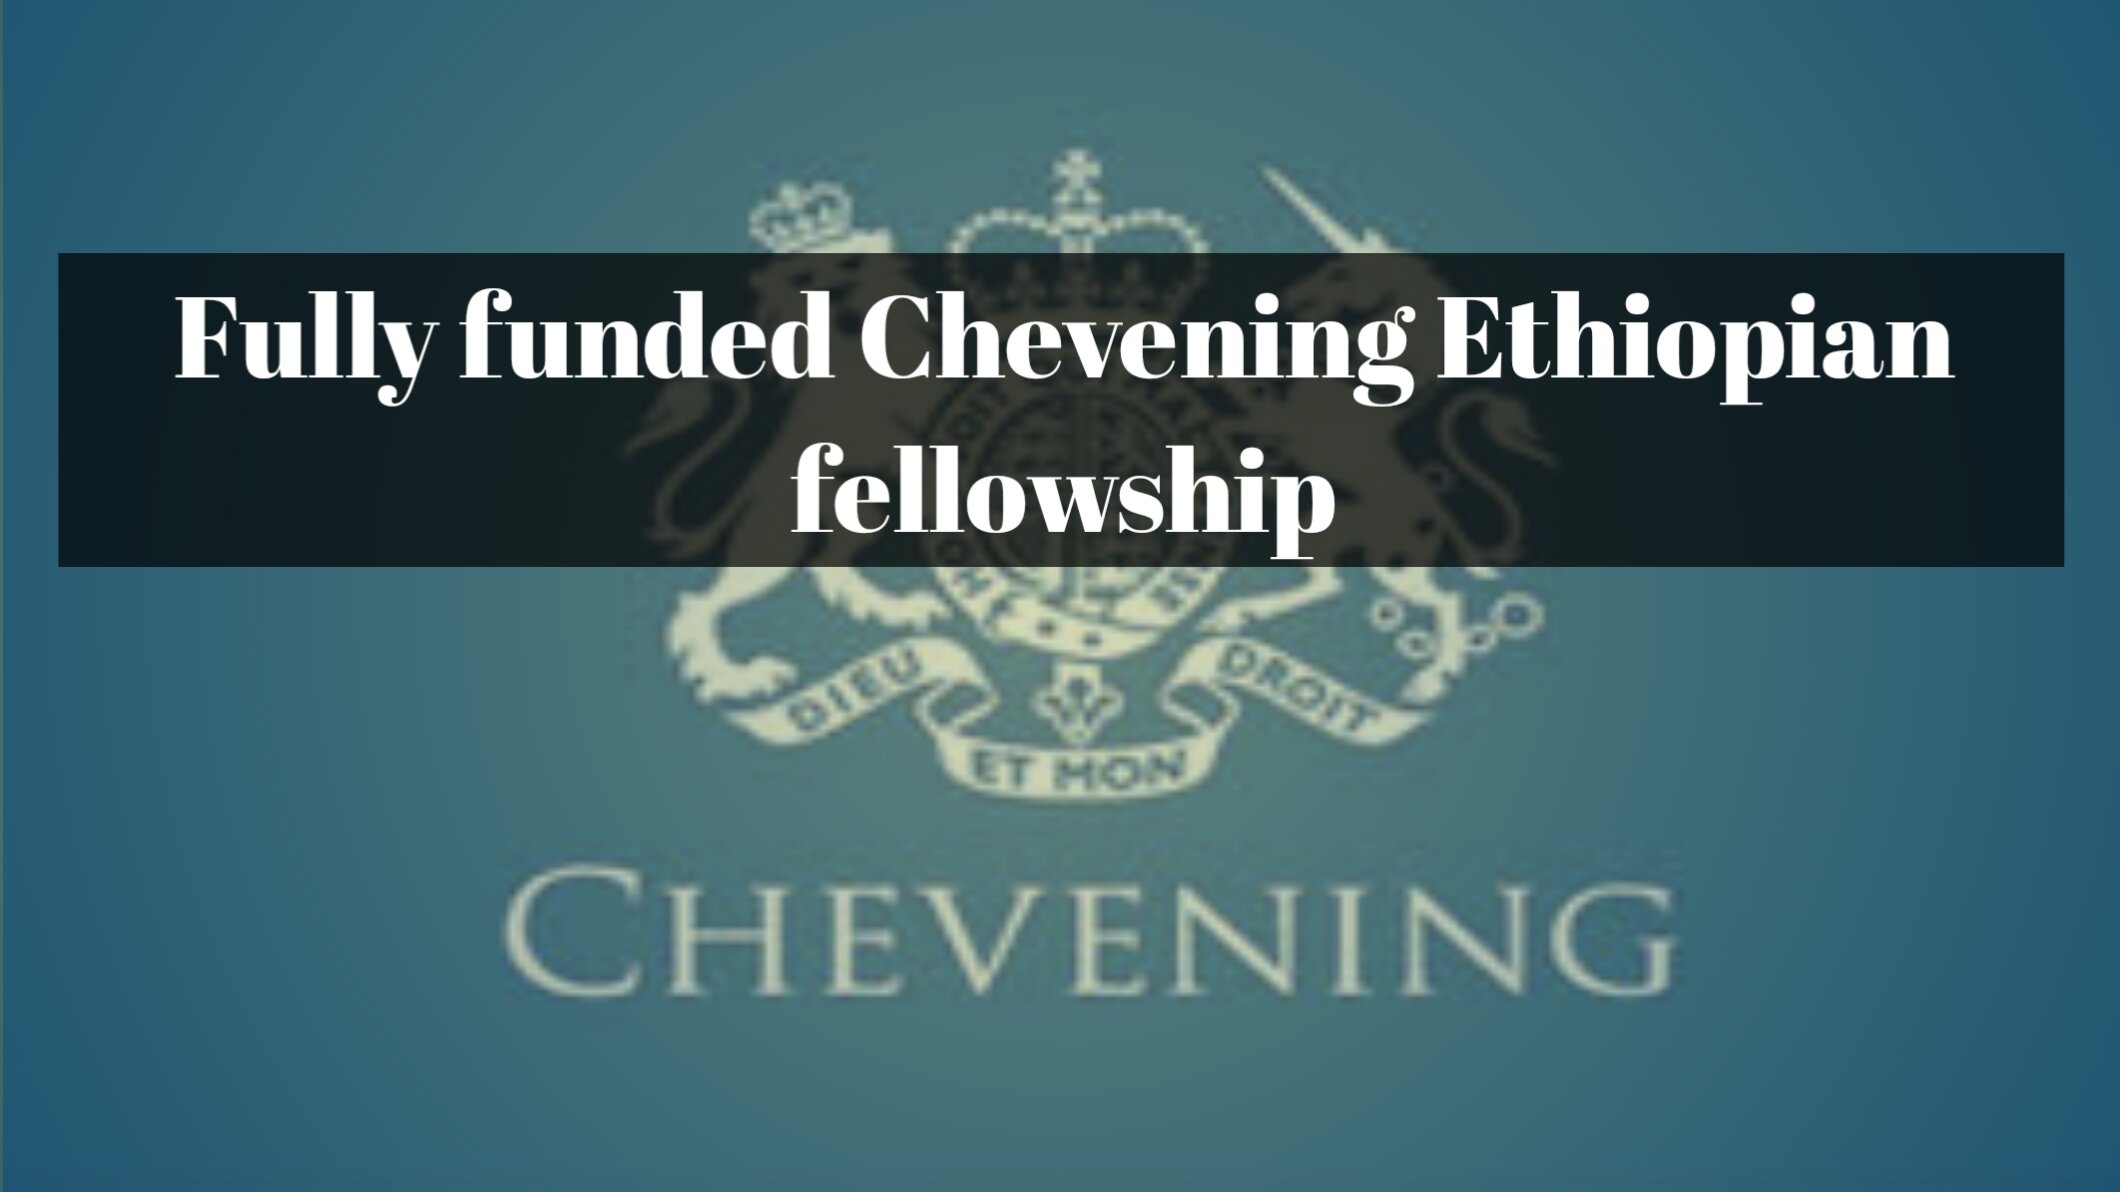 Chevening scholarships for Ethiopian Students